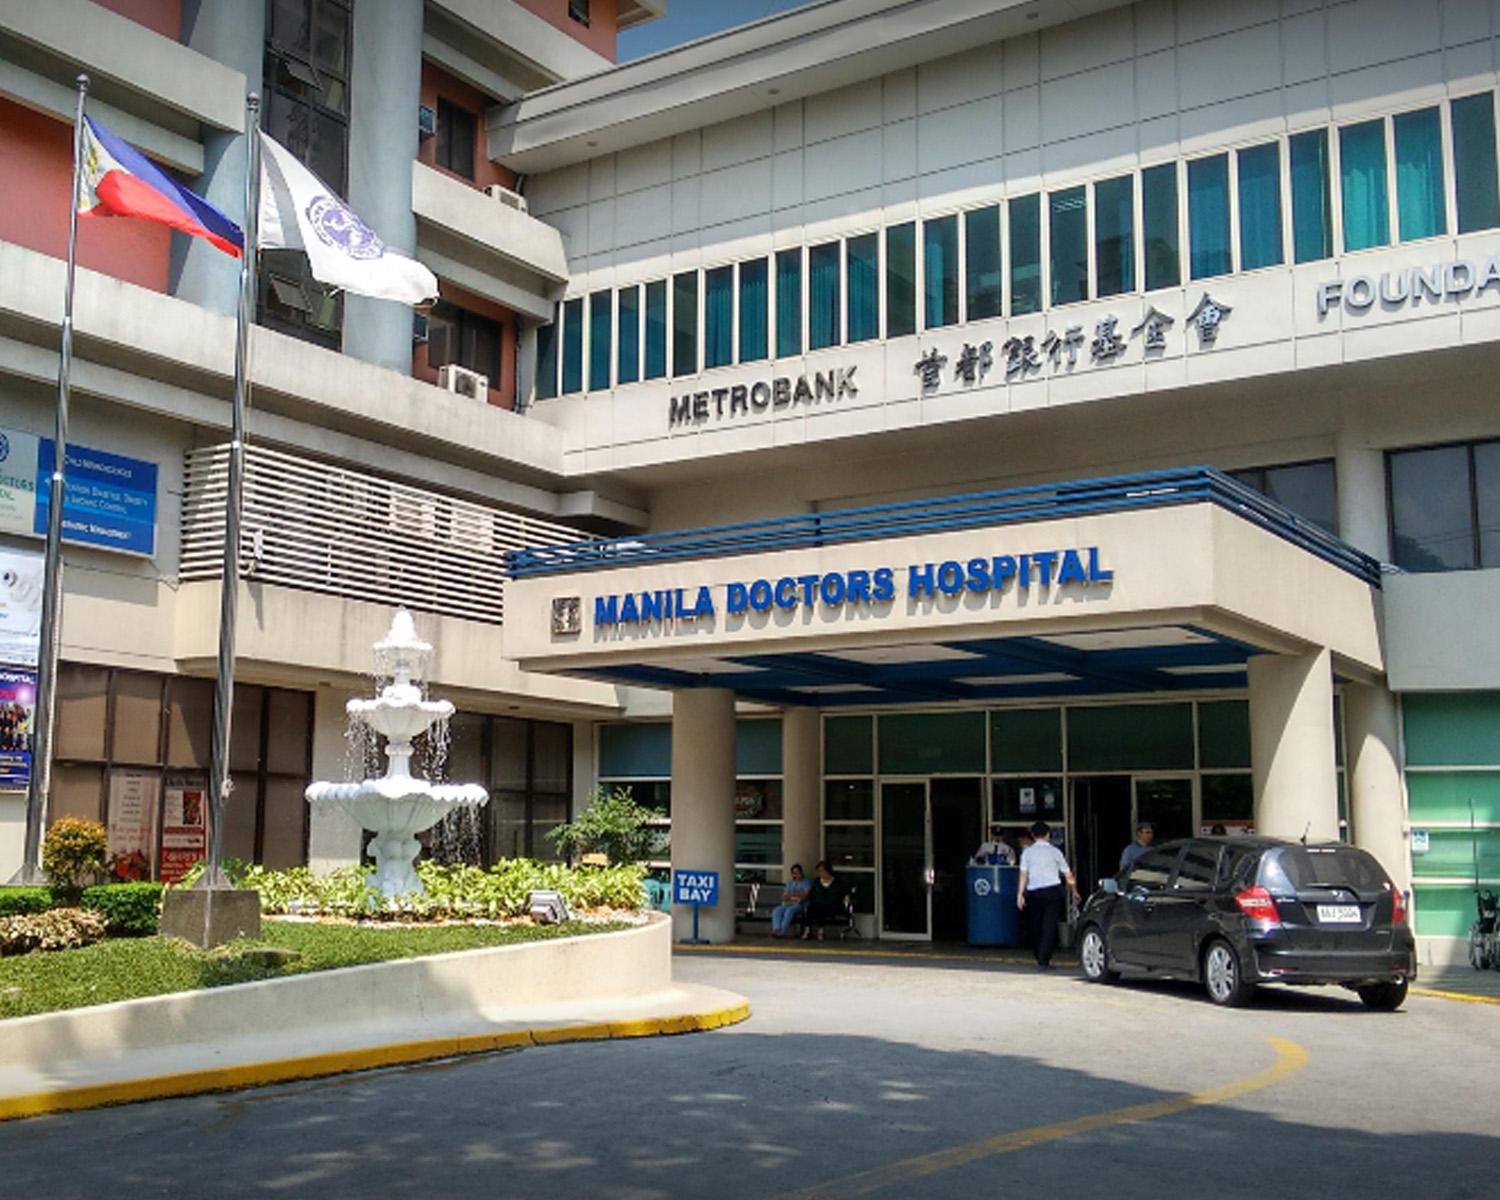 MANILA DOCTORS HOSPITAL